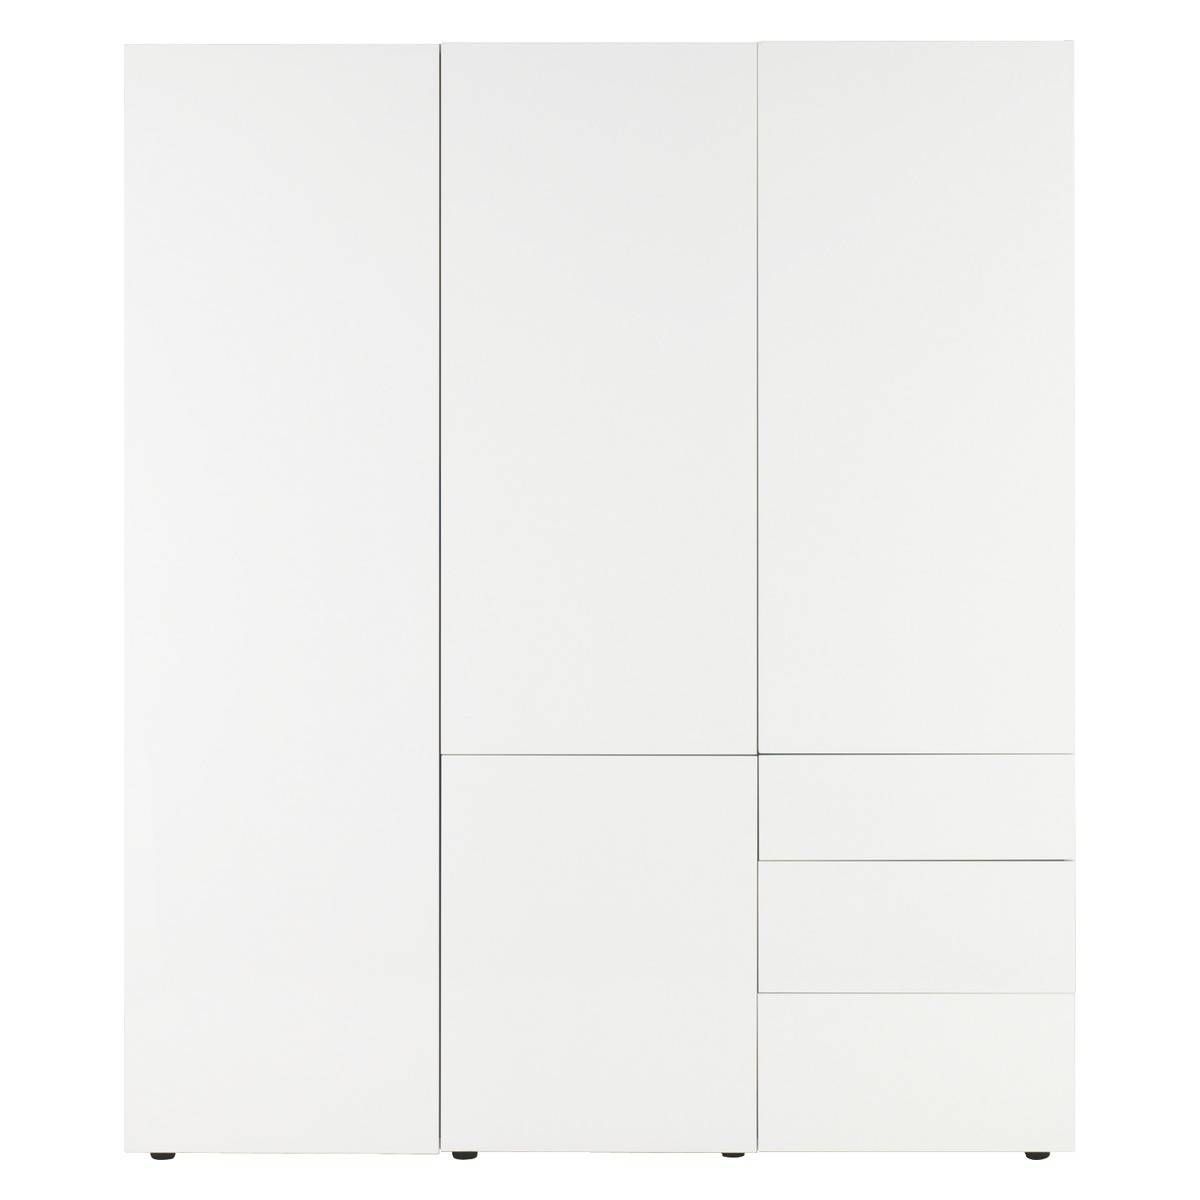 Perouse White 3 Door Wardrobe 180cm Width | Buy Now At Habitat Uk Inside White 3 Door Wardrobes (View 11 of 15)